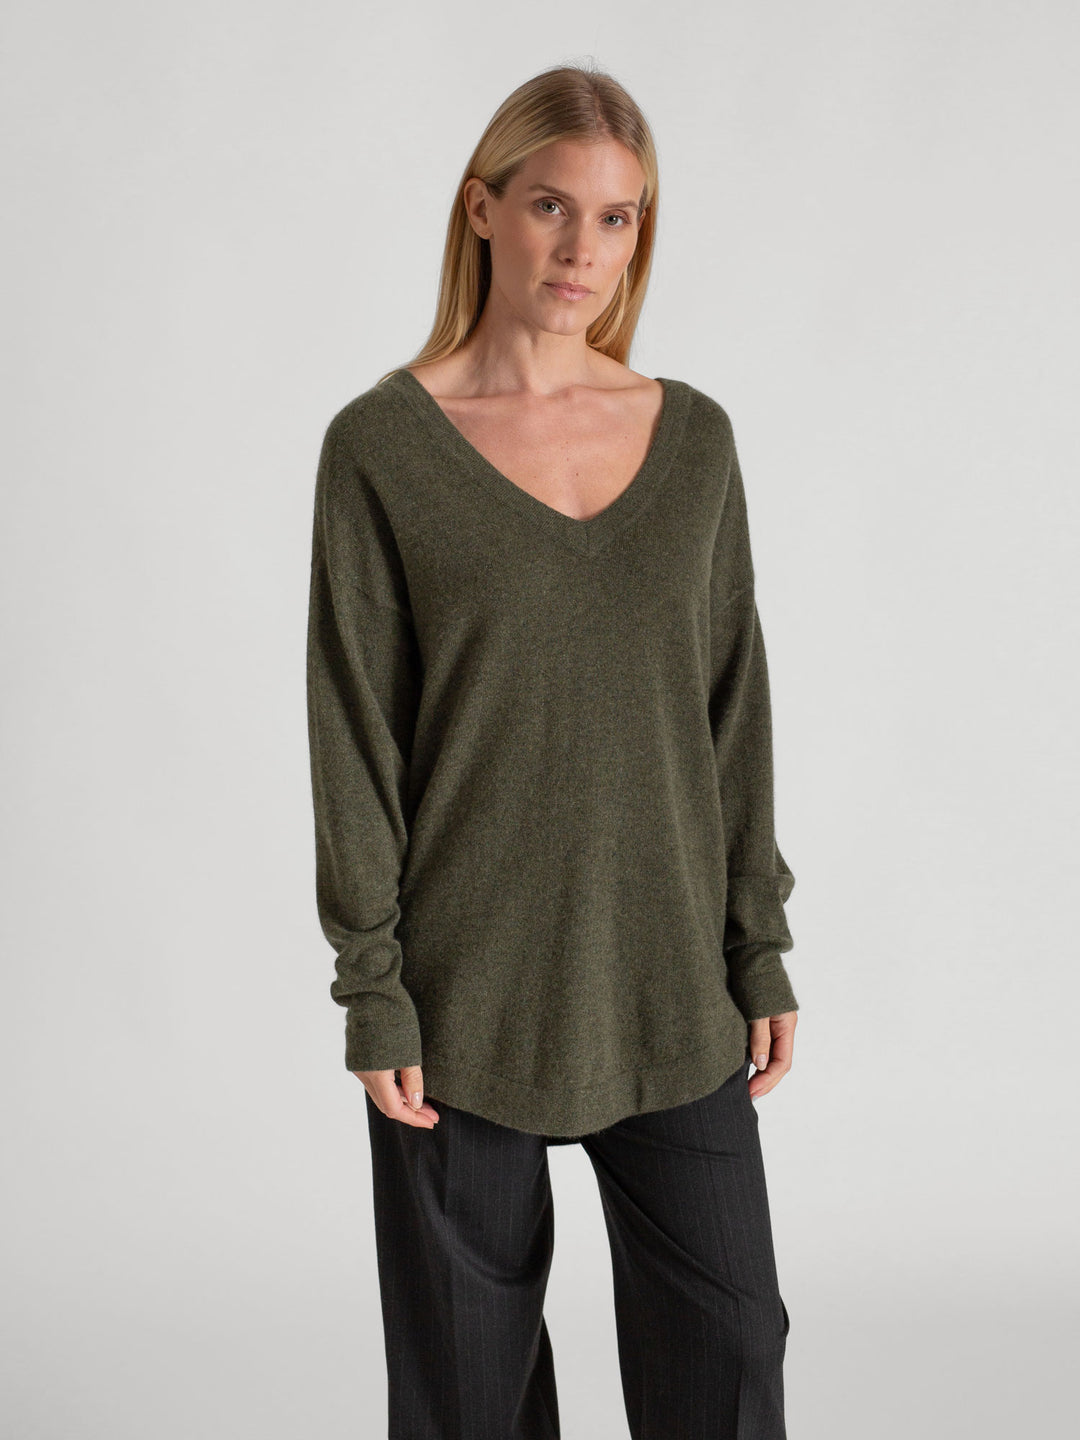 Cashmere sweater v-neck "Alva" in 100% pure cashmere. Scandinavian design by Kashmina.